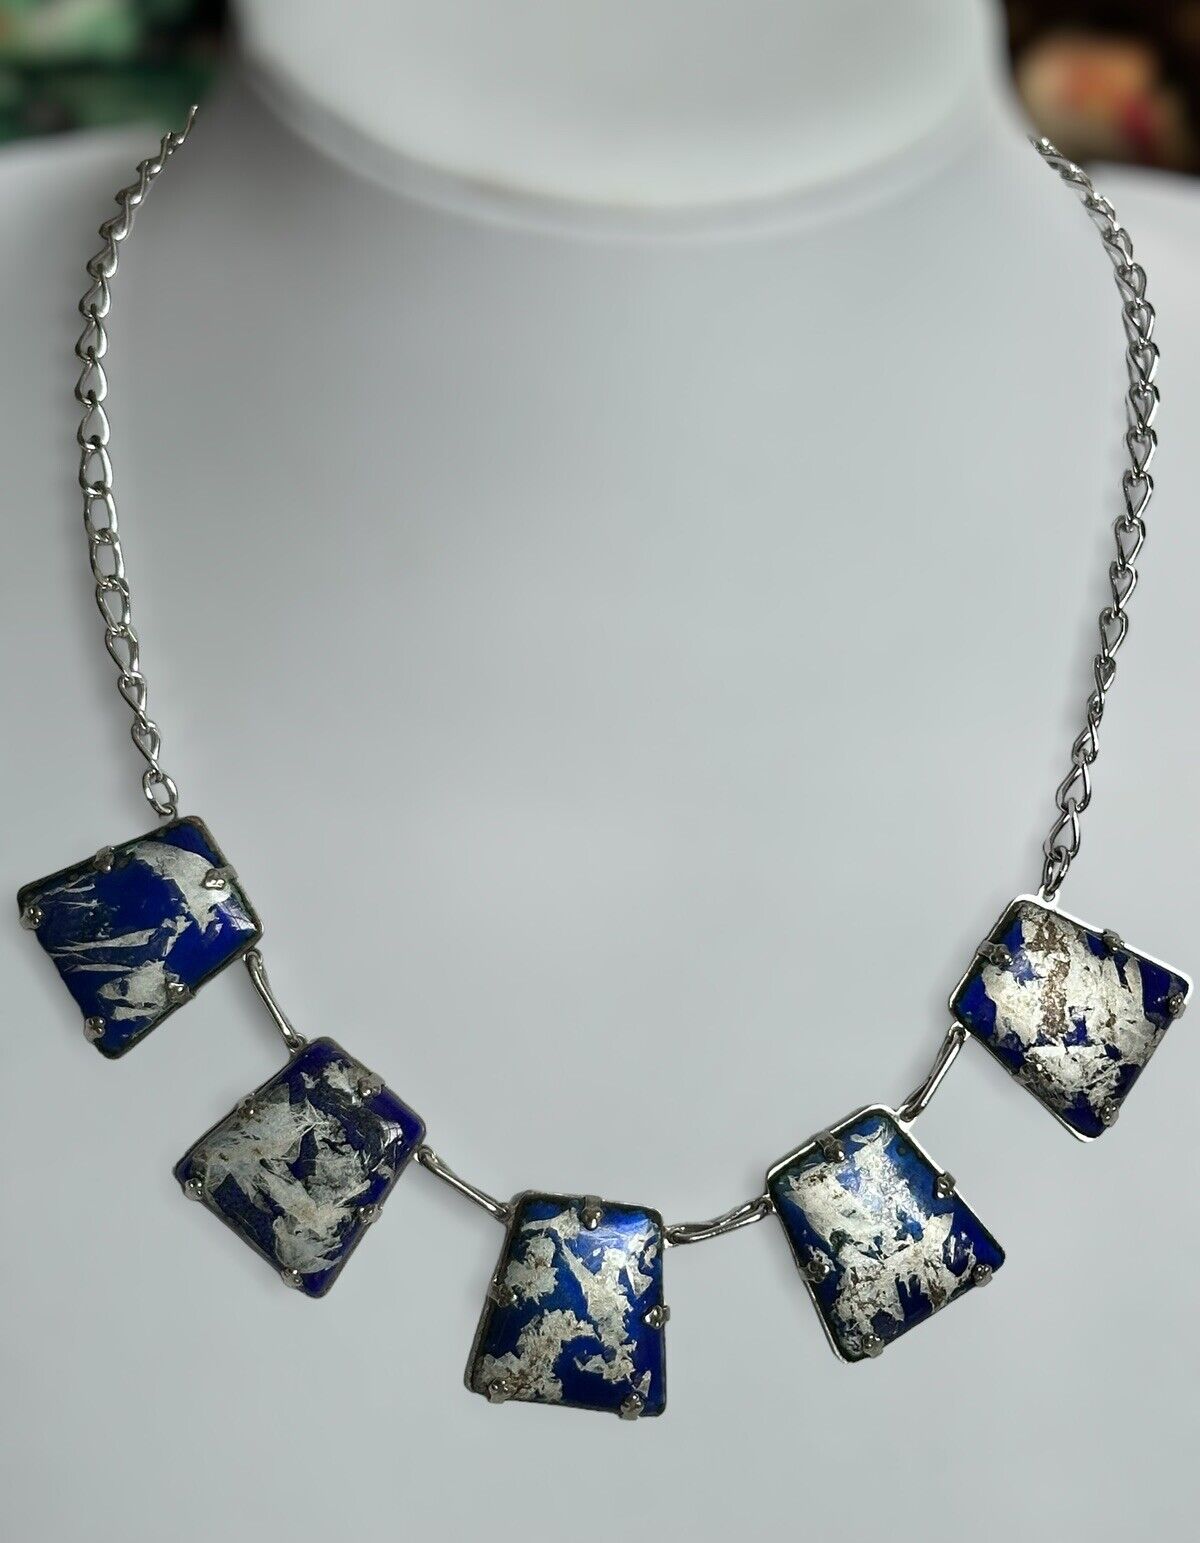 Vintage Silver Tone Blue Enamel Drops Necklace